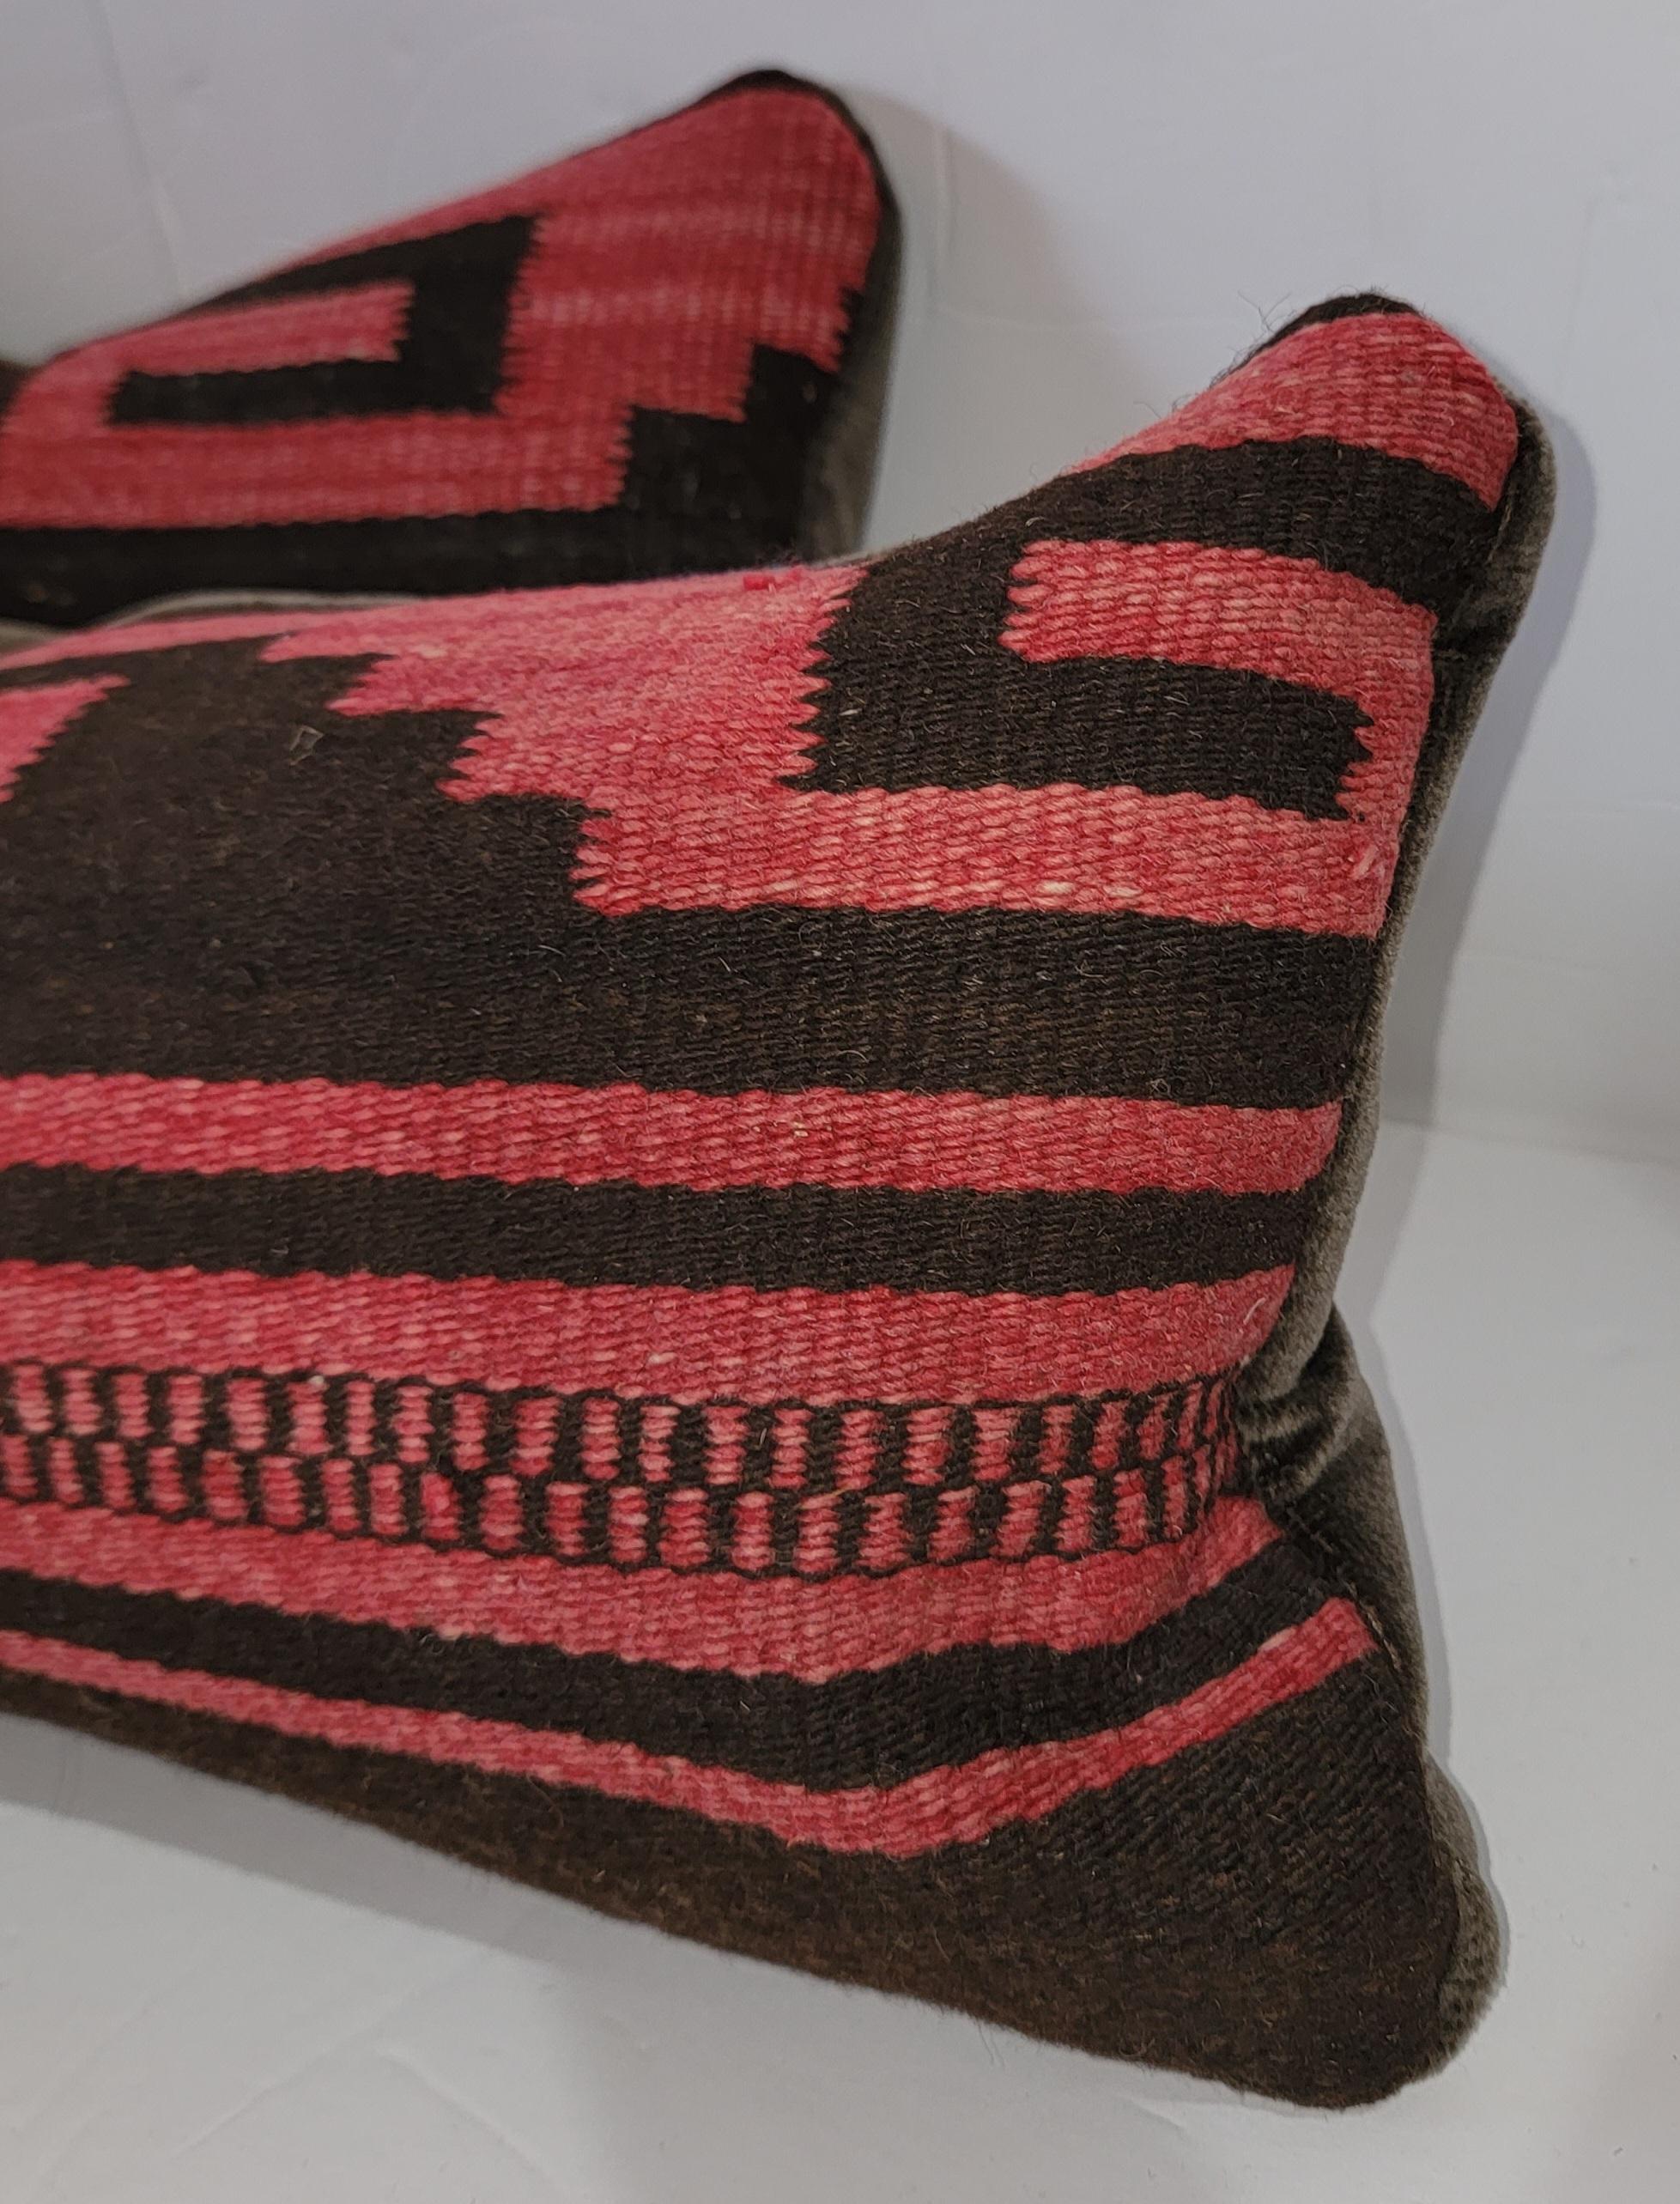 Hand-Woven Mexican Indian Weaving Bolster Pillows, Pair